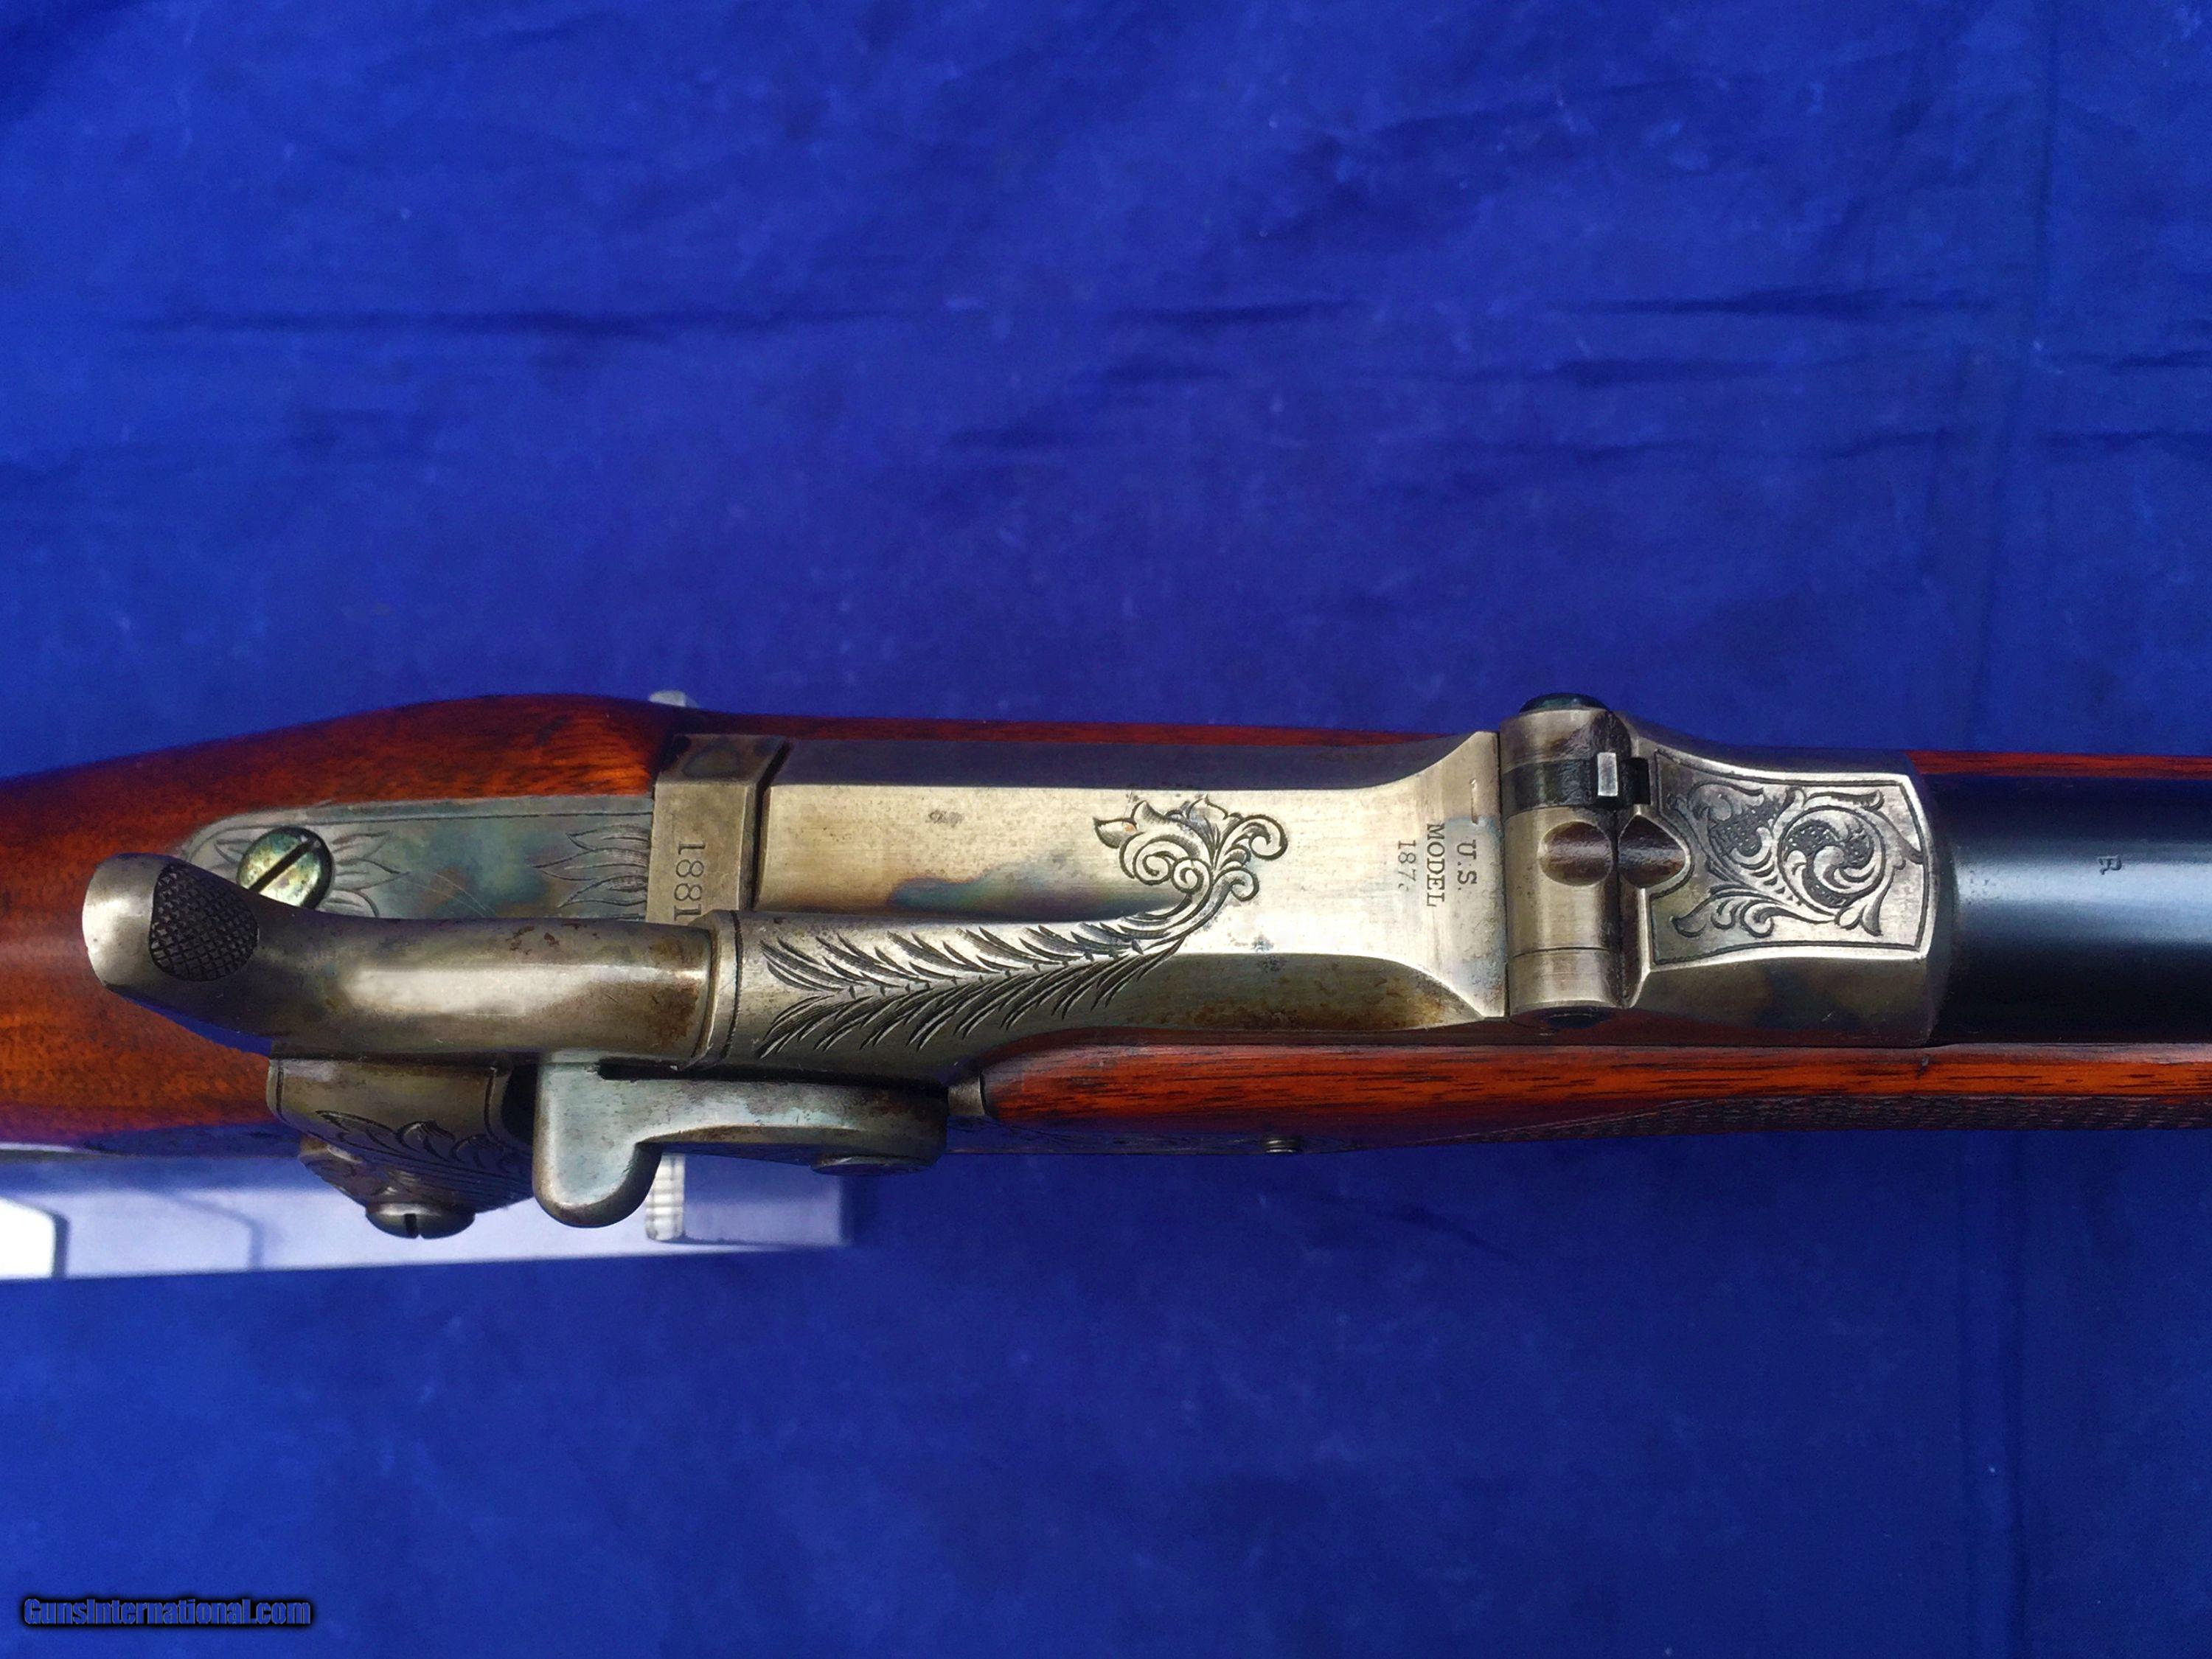 Original Springfield Armory Logo - Original Springfield Armory U.S. Model 1875 Officer's Trapdoor Rifle